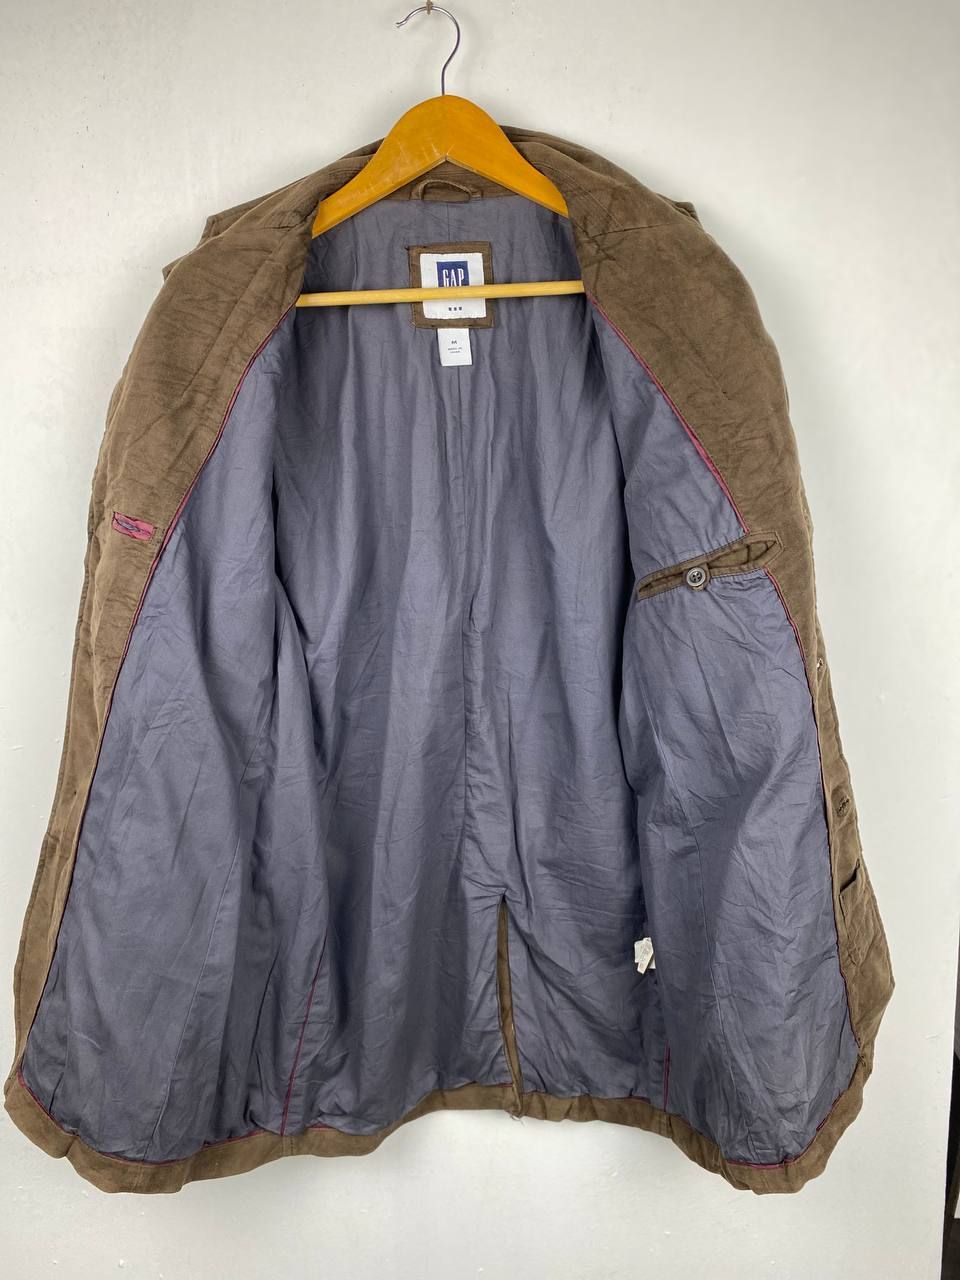 Gap gap japanese brands nice design jacket Size US M / EU 48-50 / 2 - 5 Thumbnail